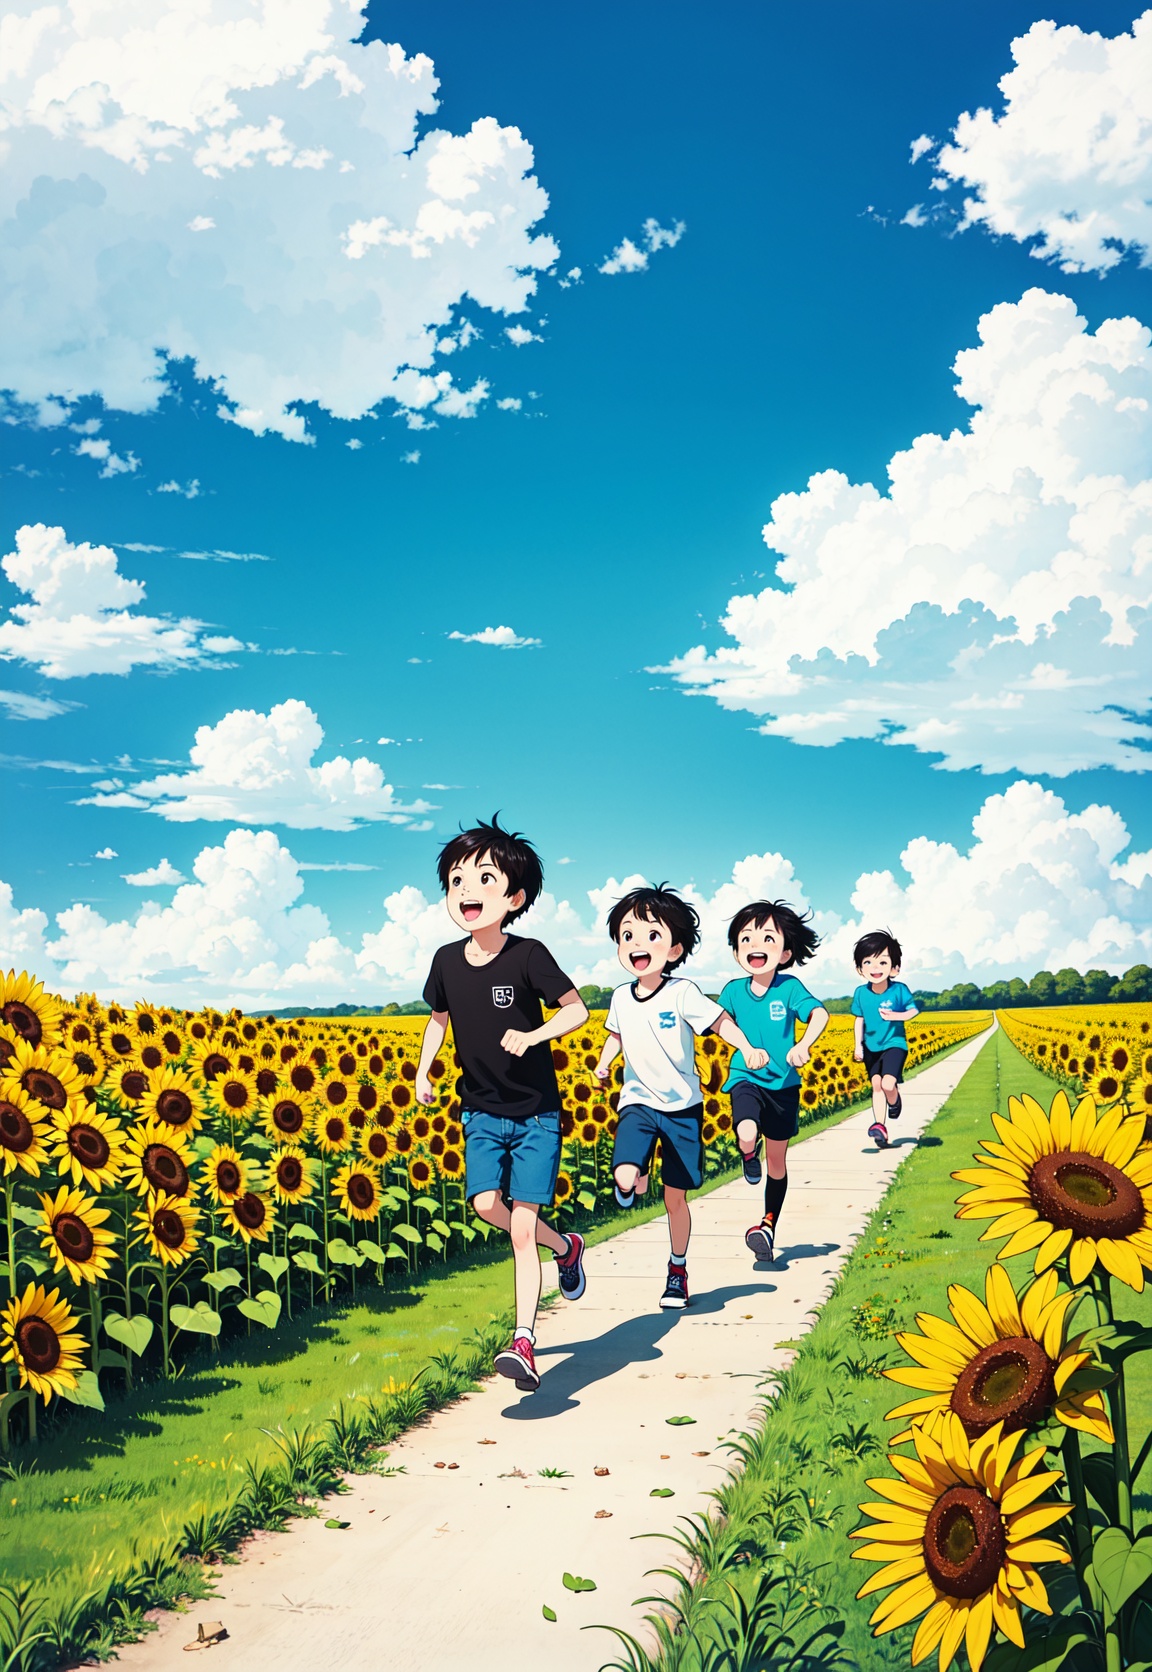  A group of children running on the grass, happy children, Children's Day, happy, around 6 years old, Asian children, black hair, blue sky, white clouds, sunflowers, flowers